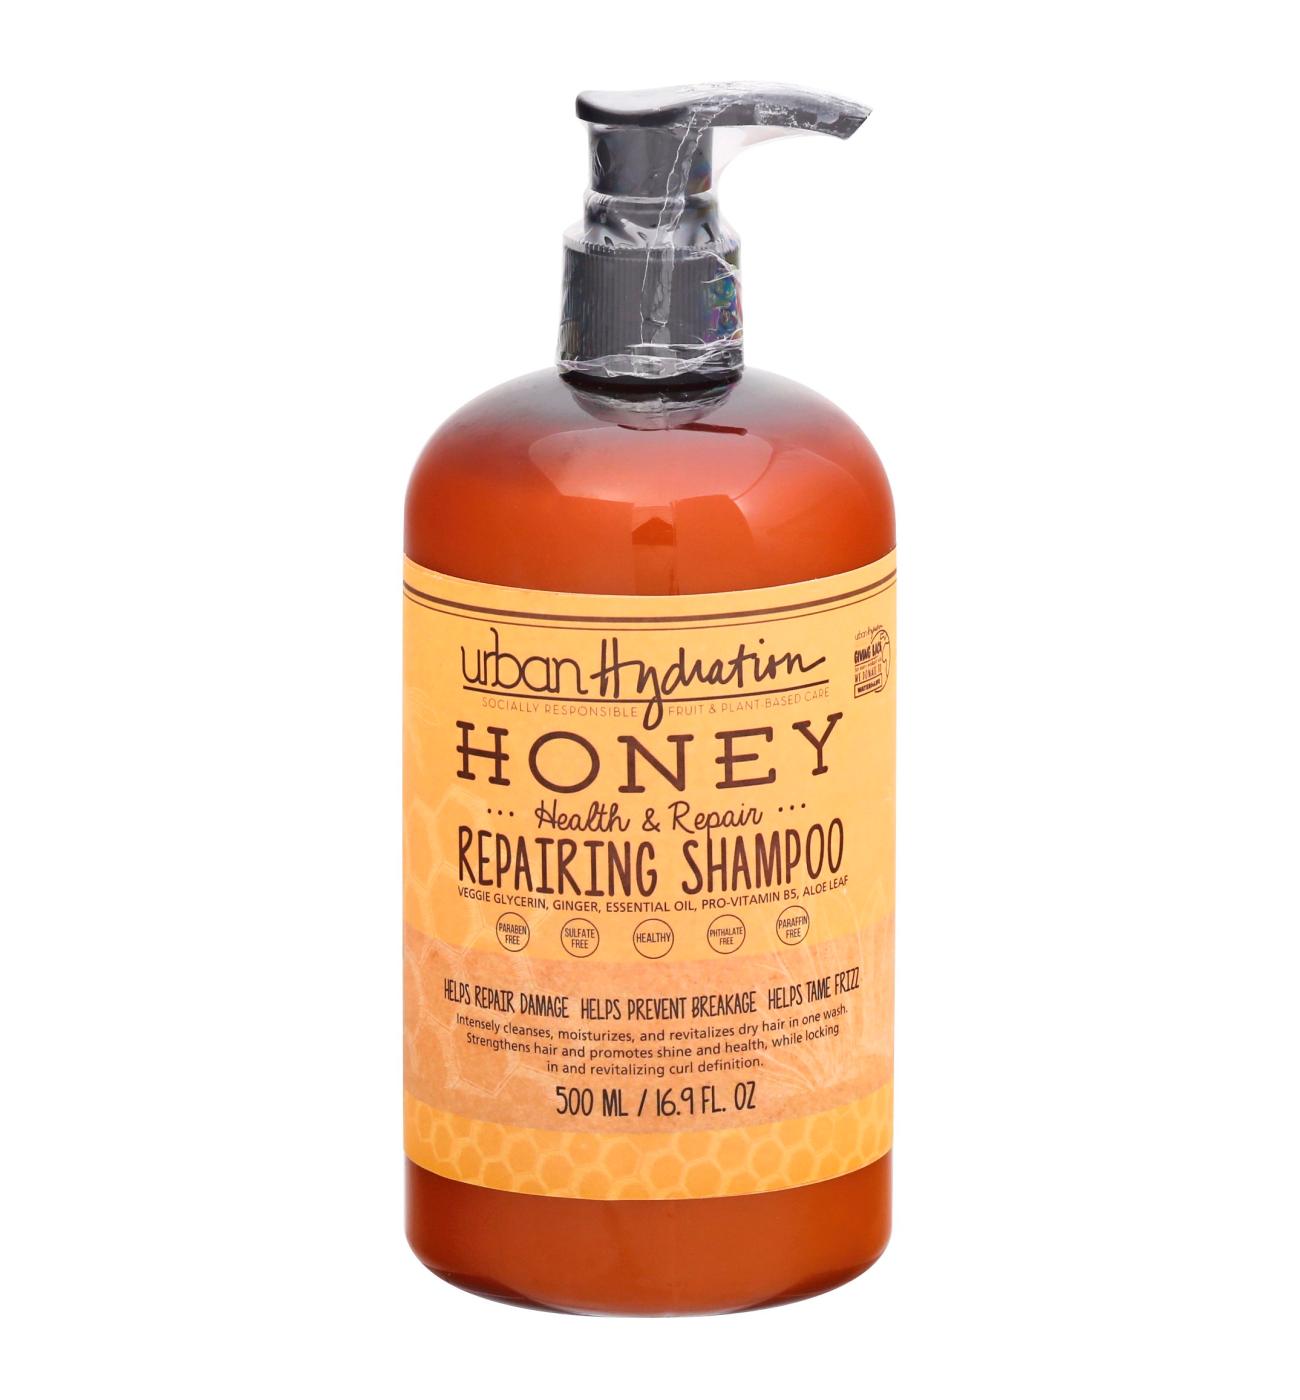 Urban Hydration Honey Repairing Shampoo; image 1 of 2